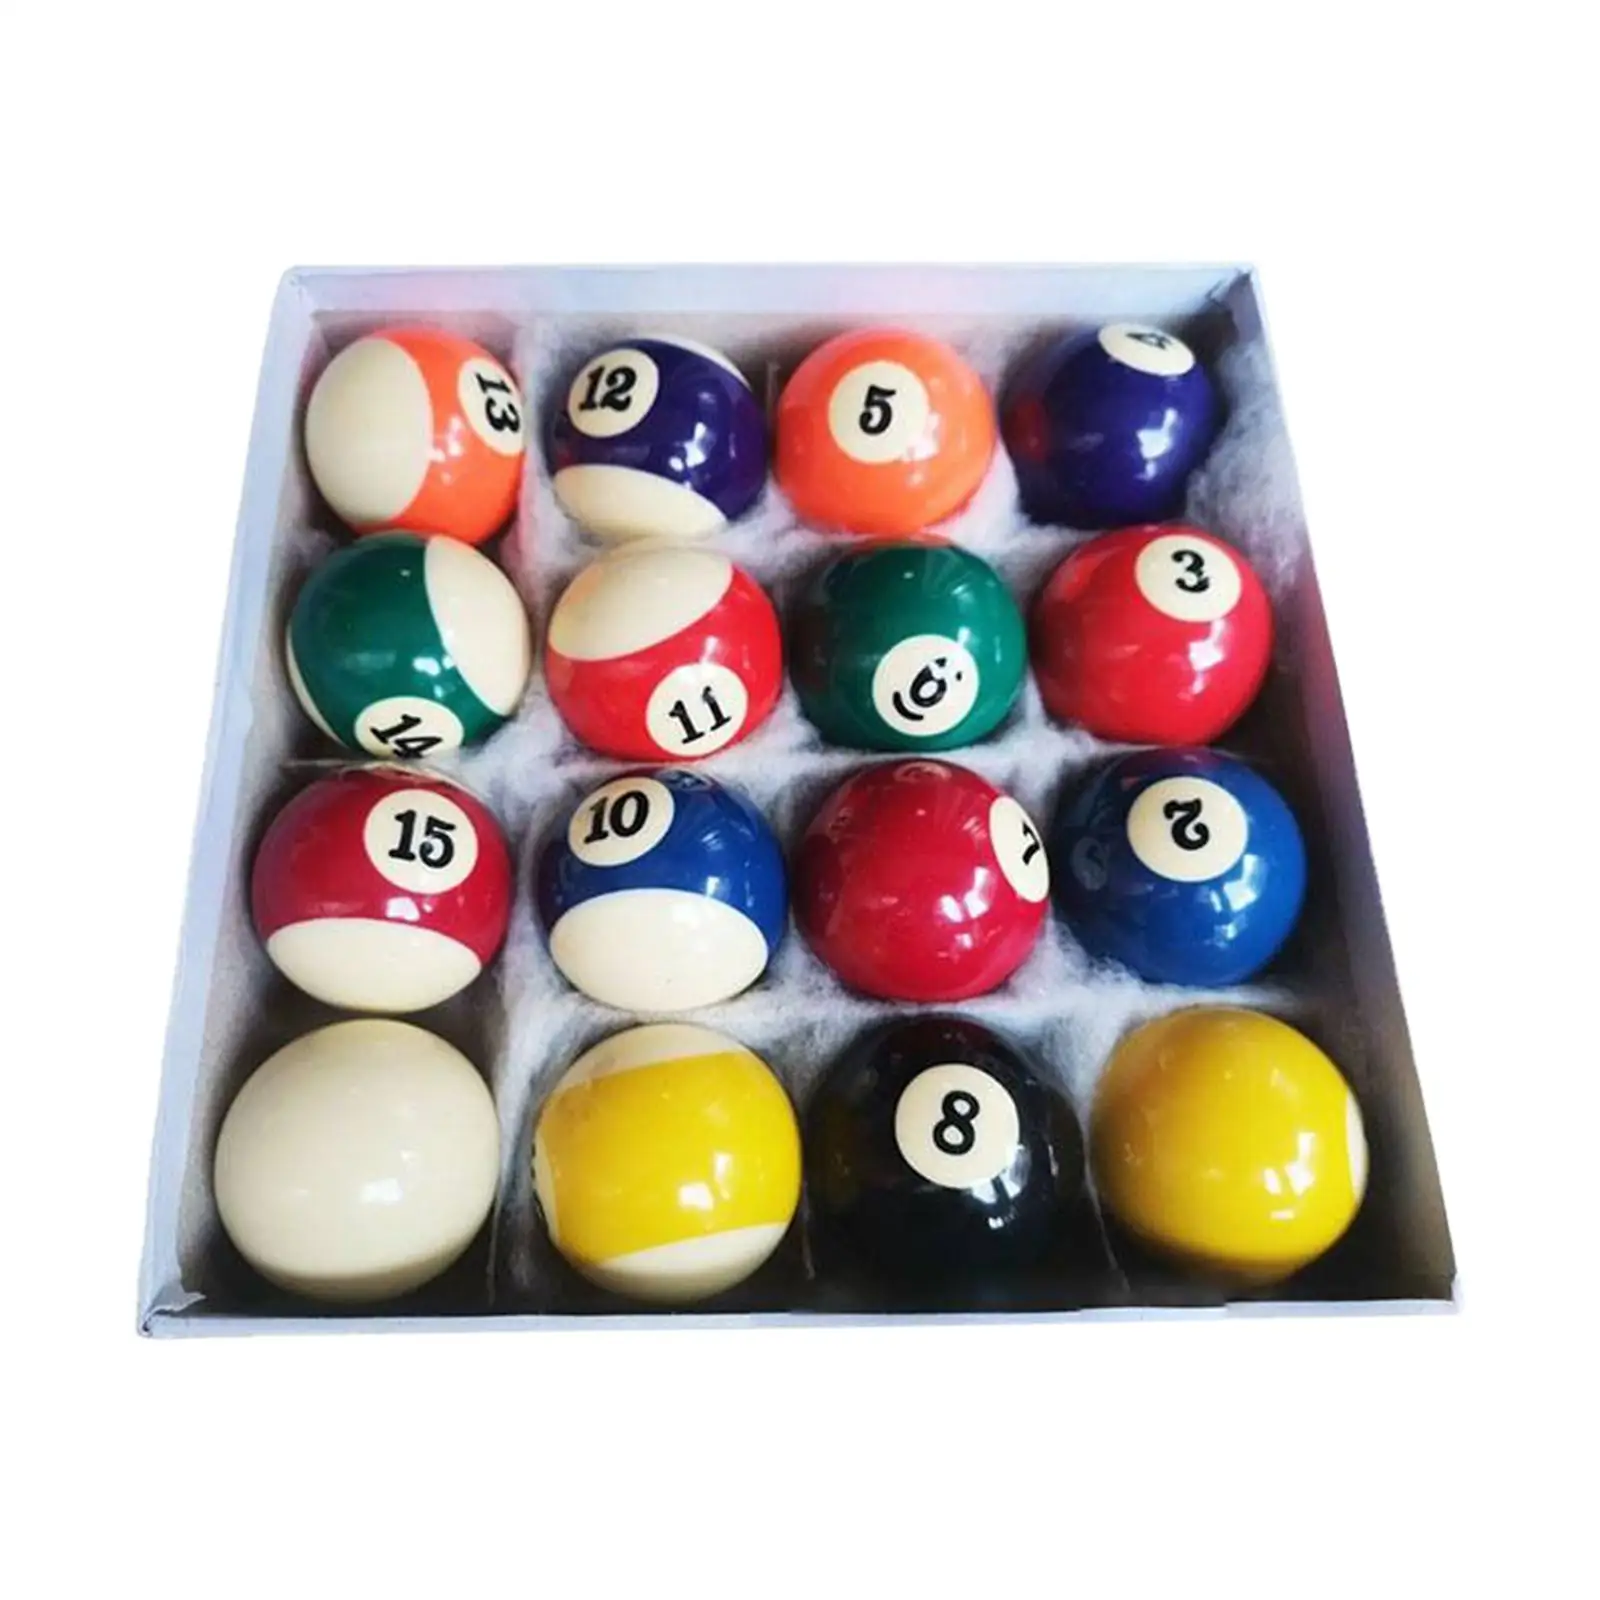 16Pcs Billiard Balls Pool Balls Set American Style Resin Billiard Balls Complete 16 Balls for Pool Tables for Exercise Indoor